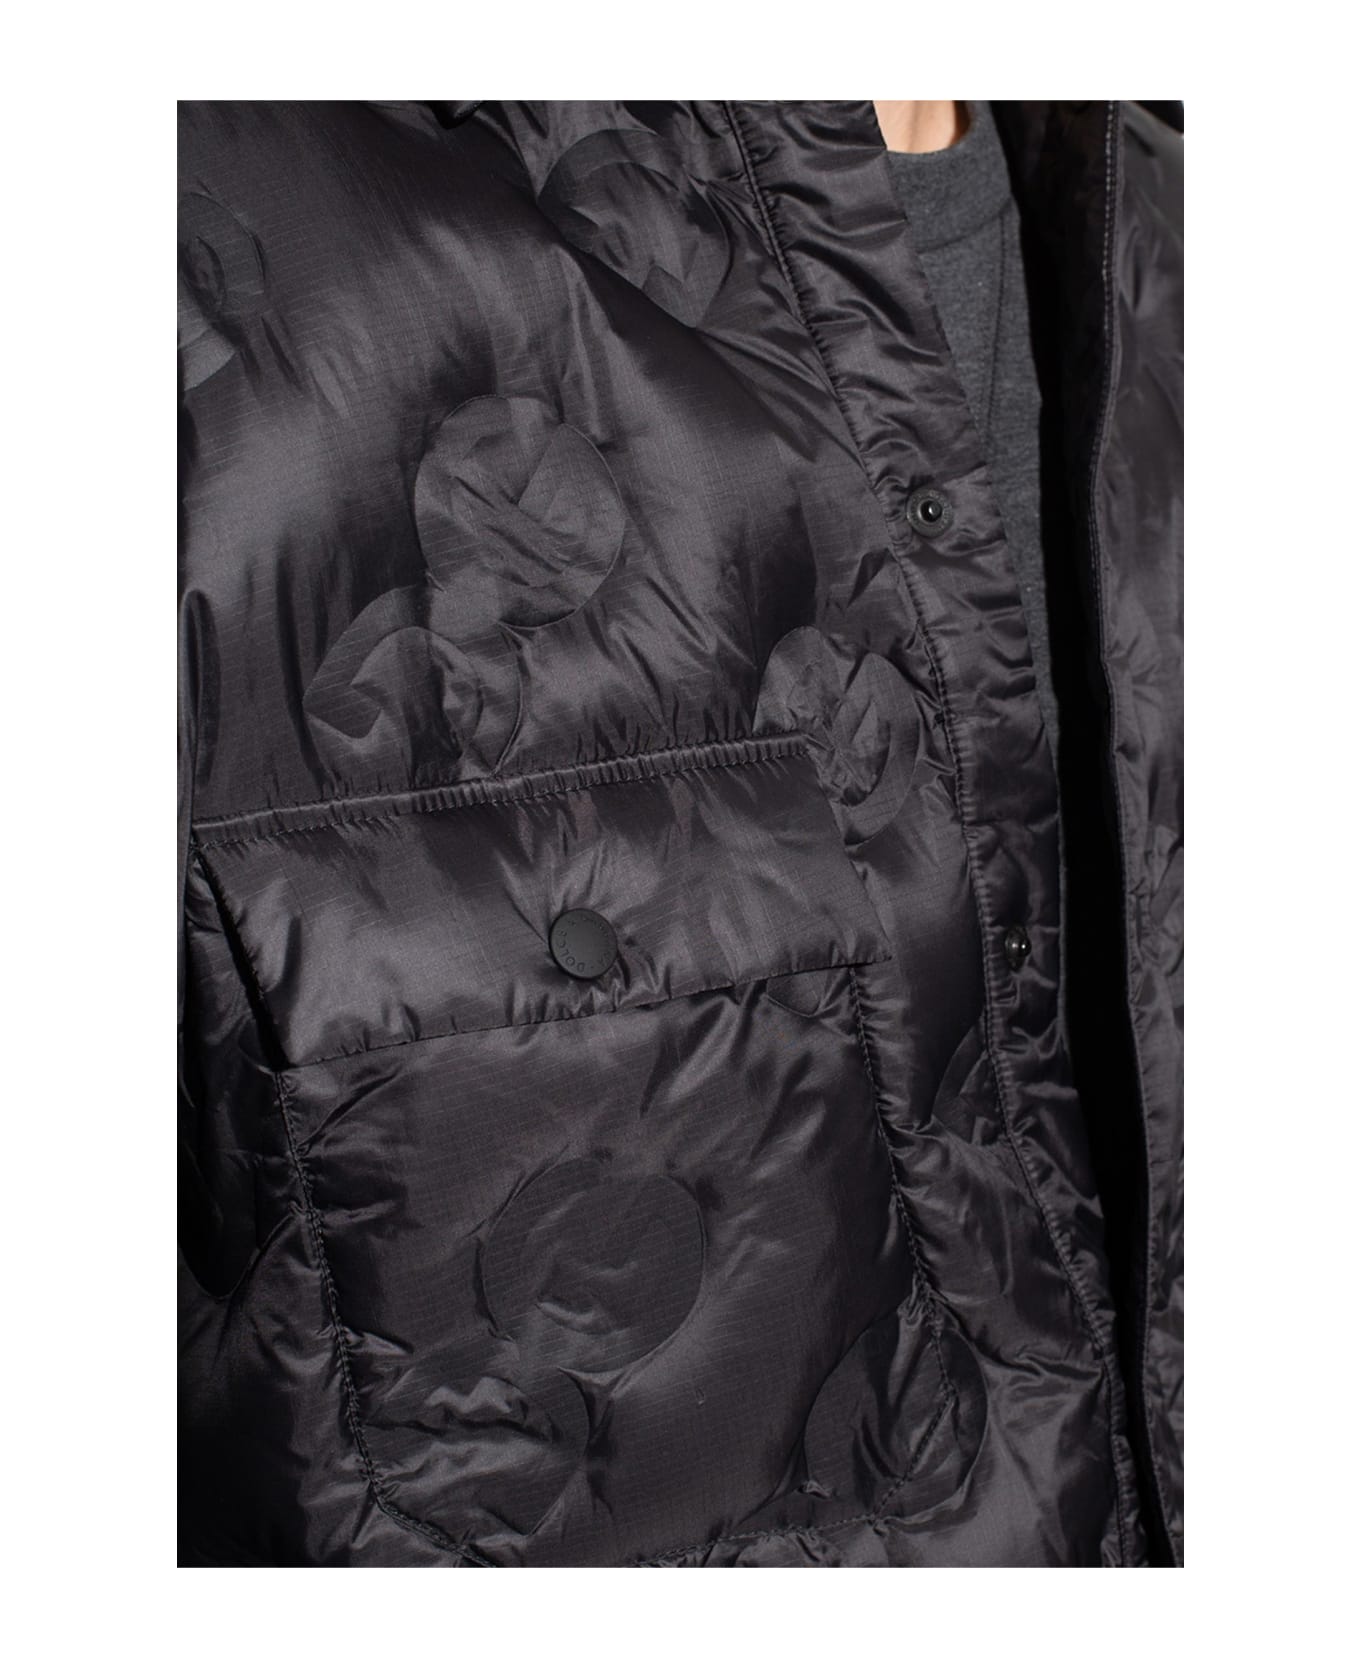 Dolce & Gabbana Quilted Jacket - Black